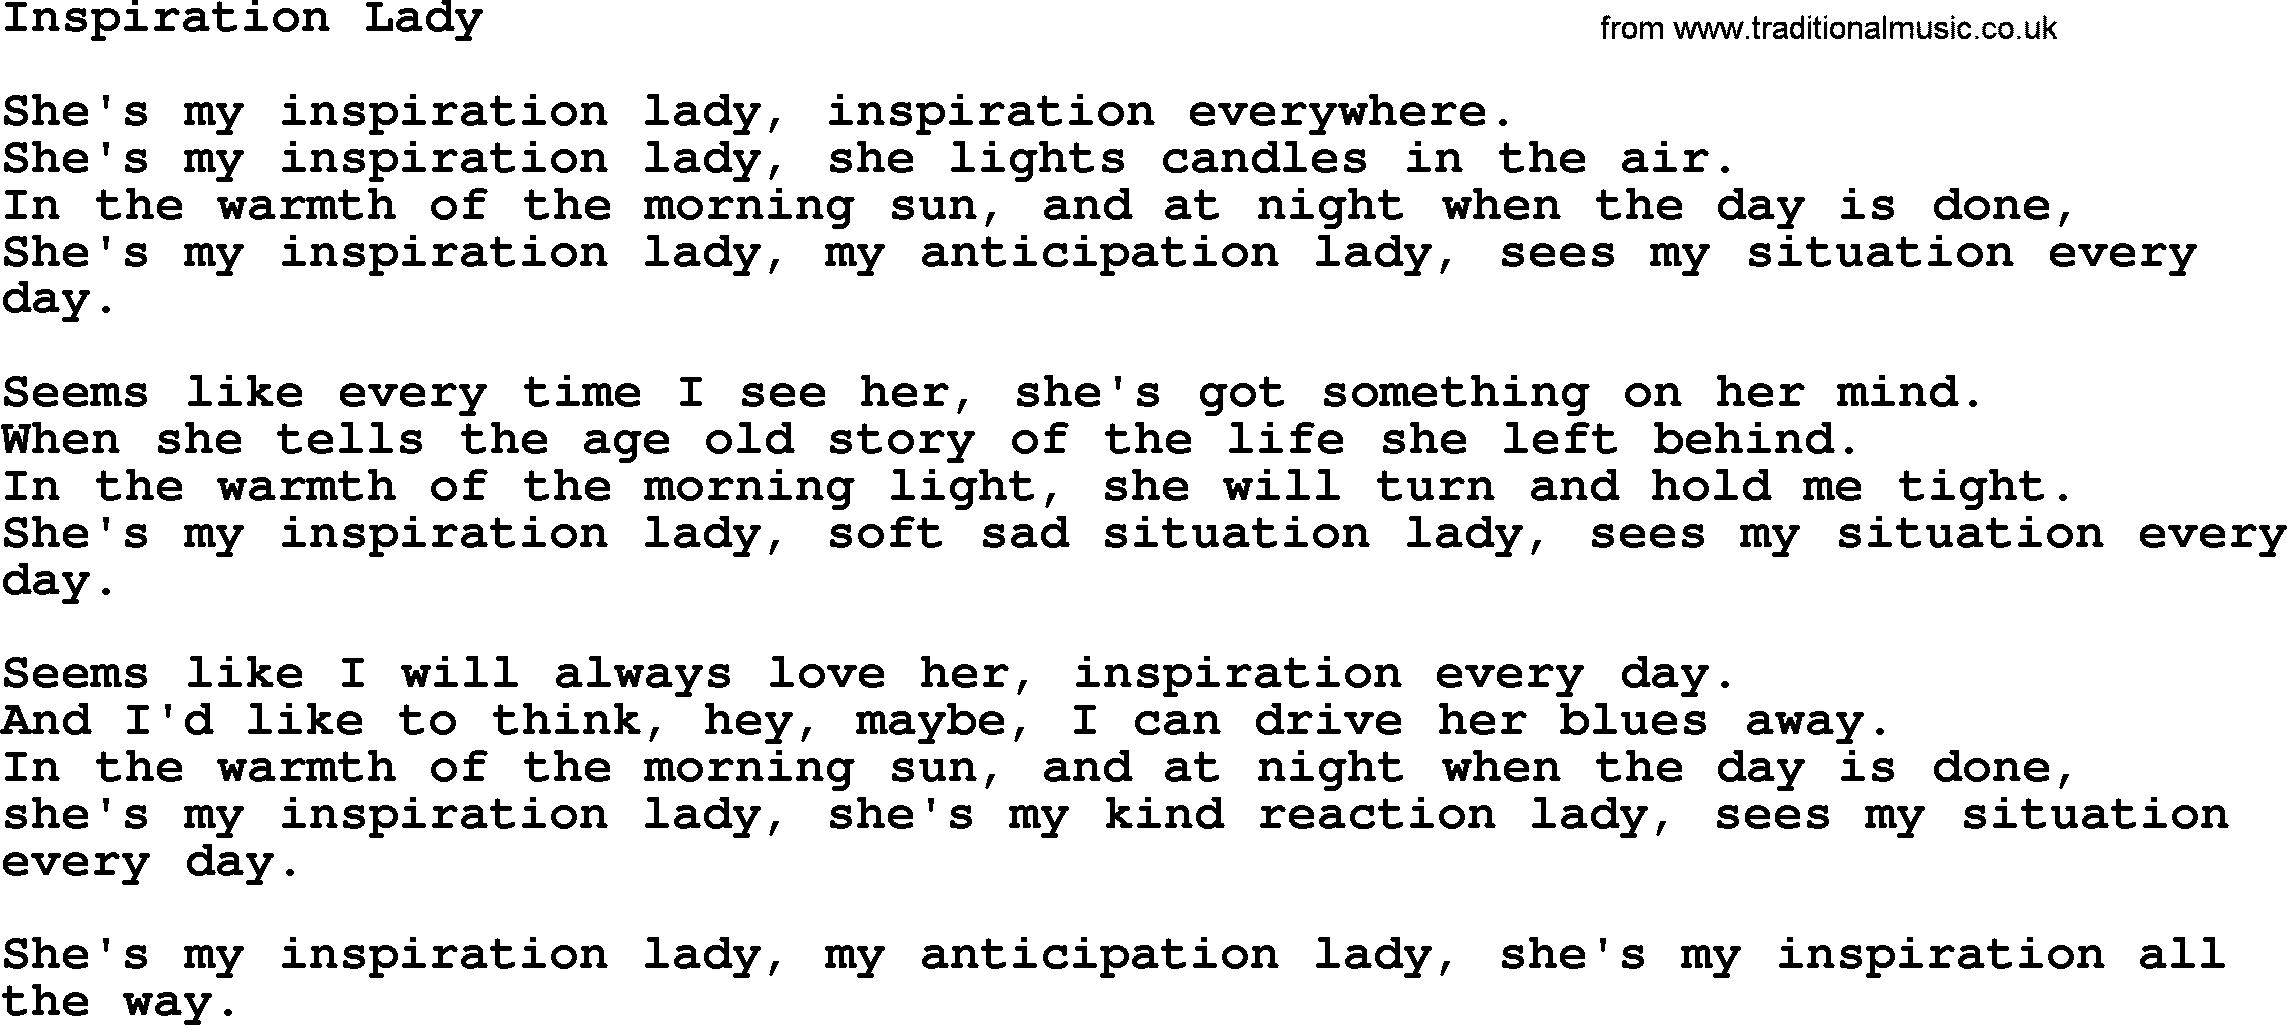 Gordon Lightfoot song Inspiration Lady, lyrics